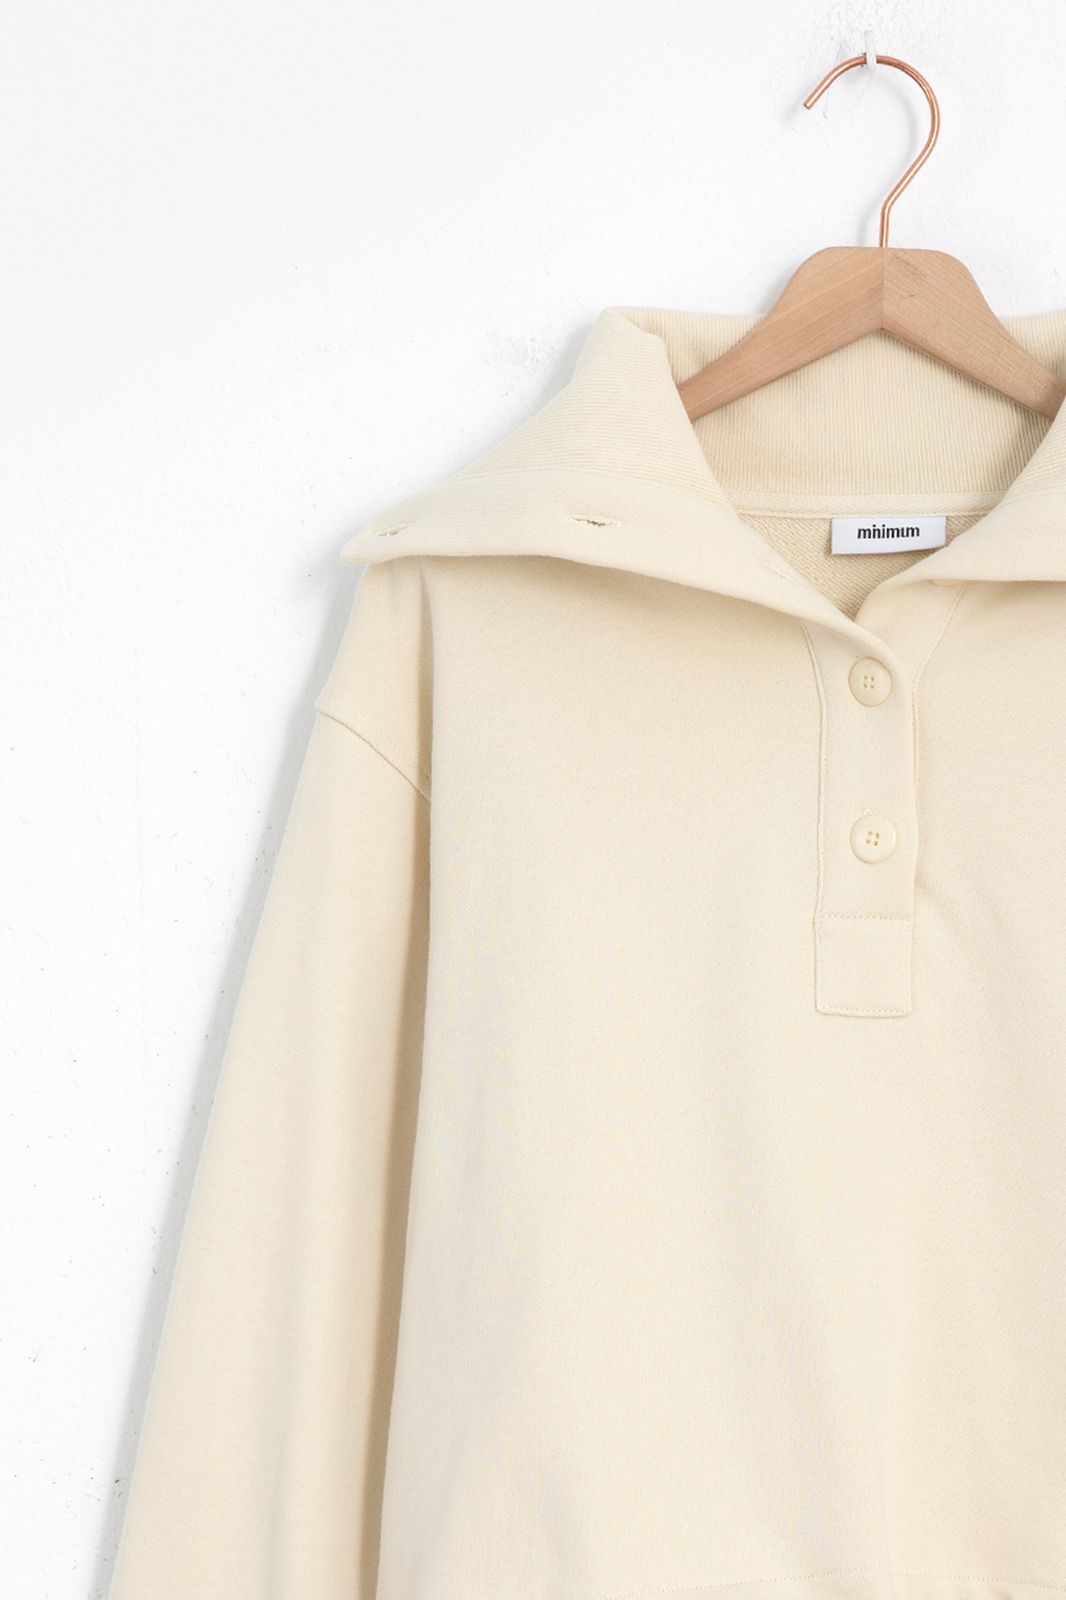 Minimum Sweater Swatti G013 - beige